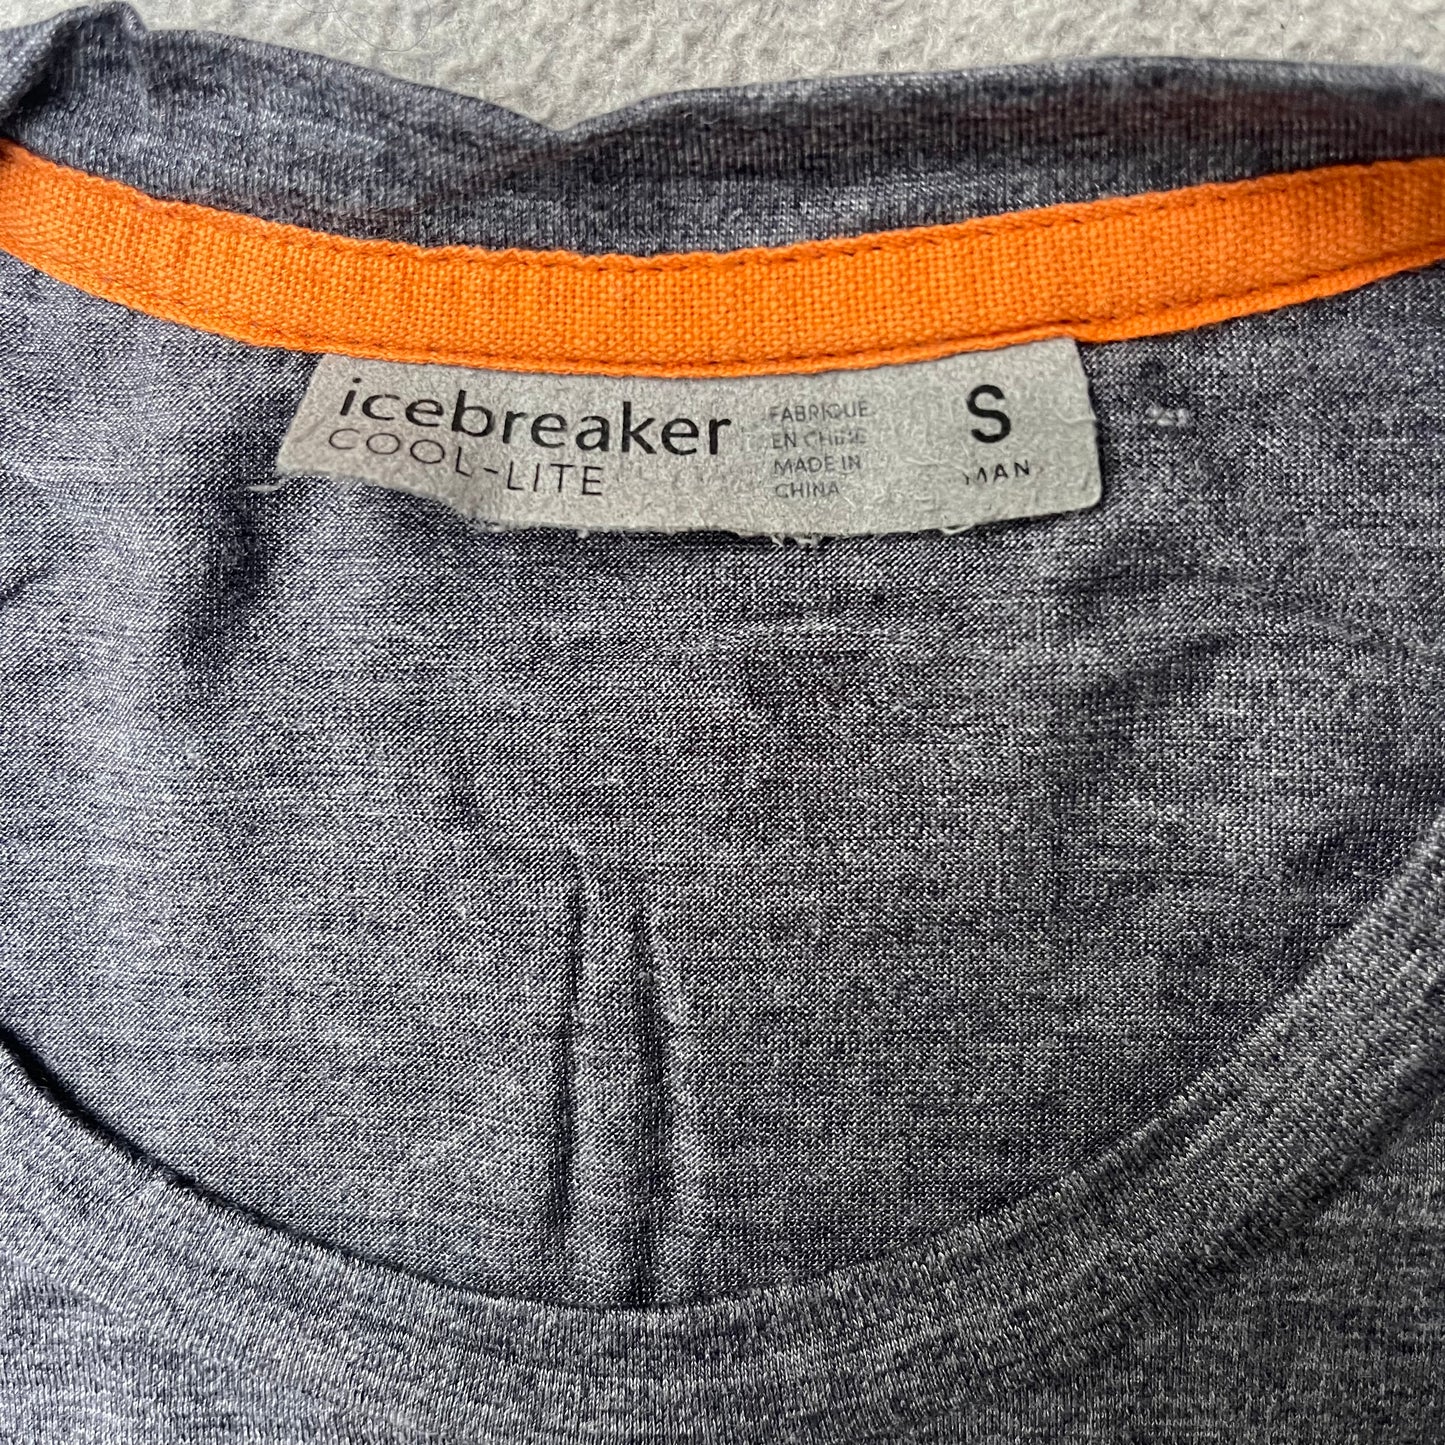 Funktions- T-Shirt von Icebreaker Merino cool lite - S Herren - grau